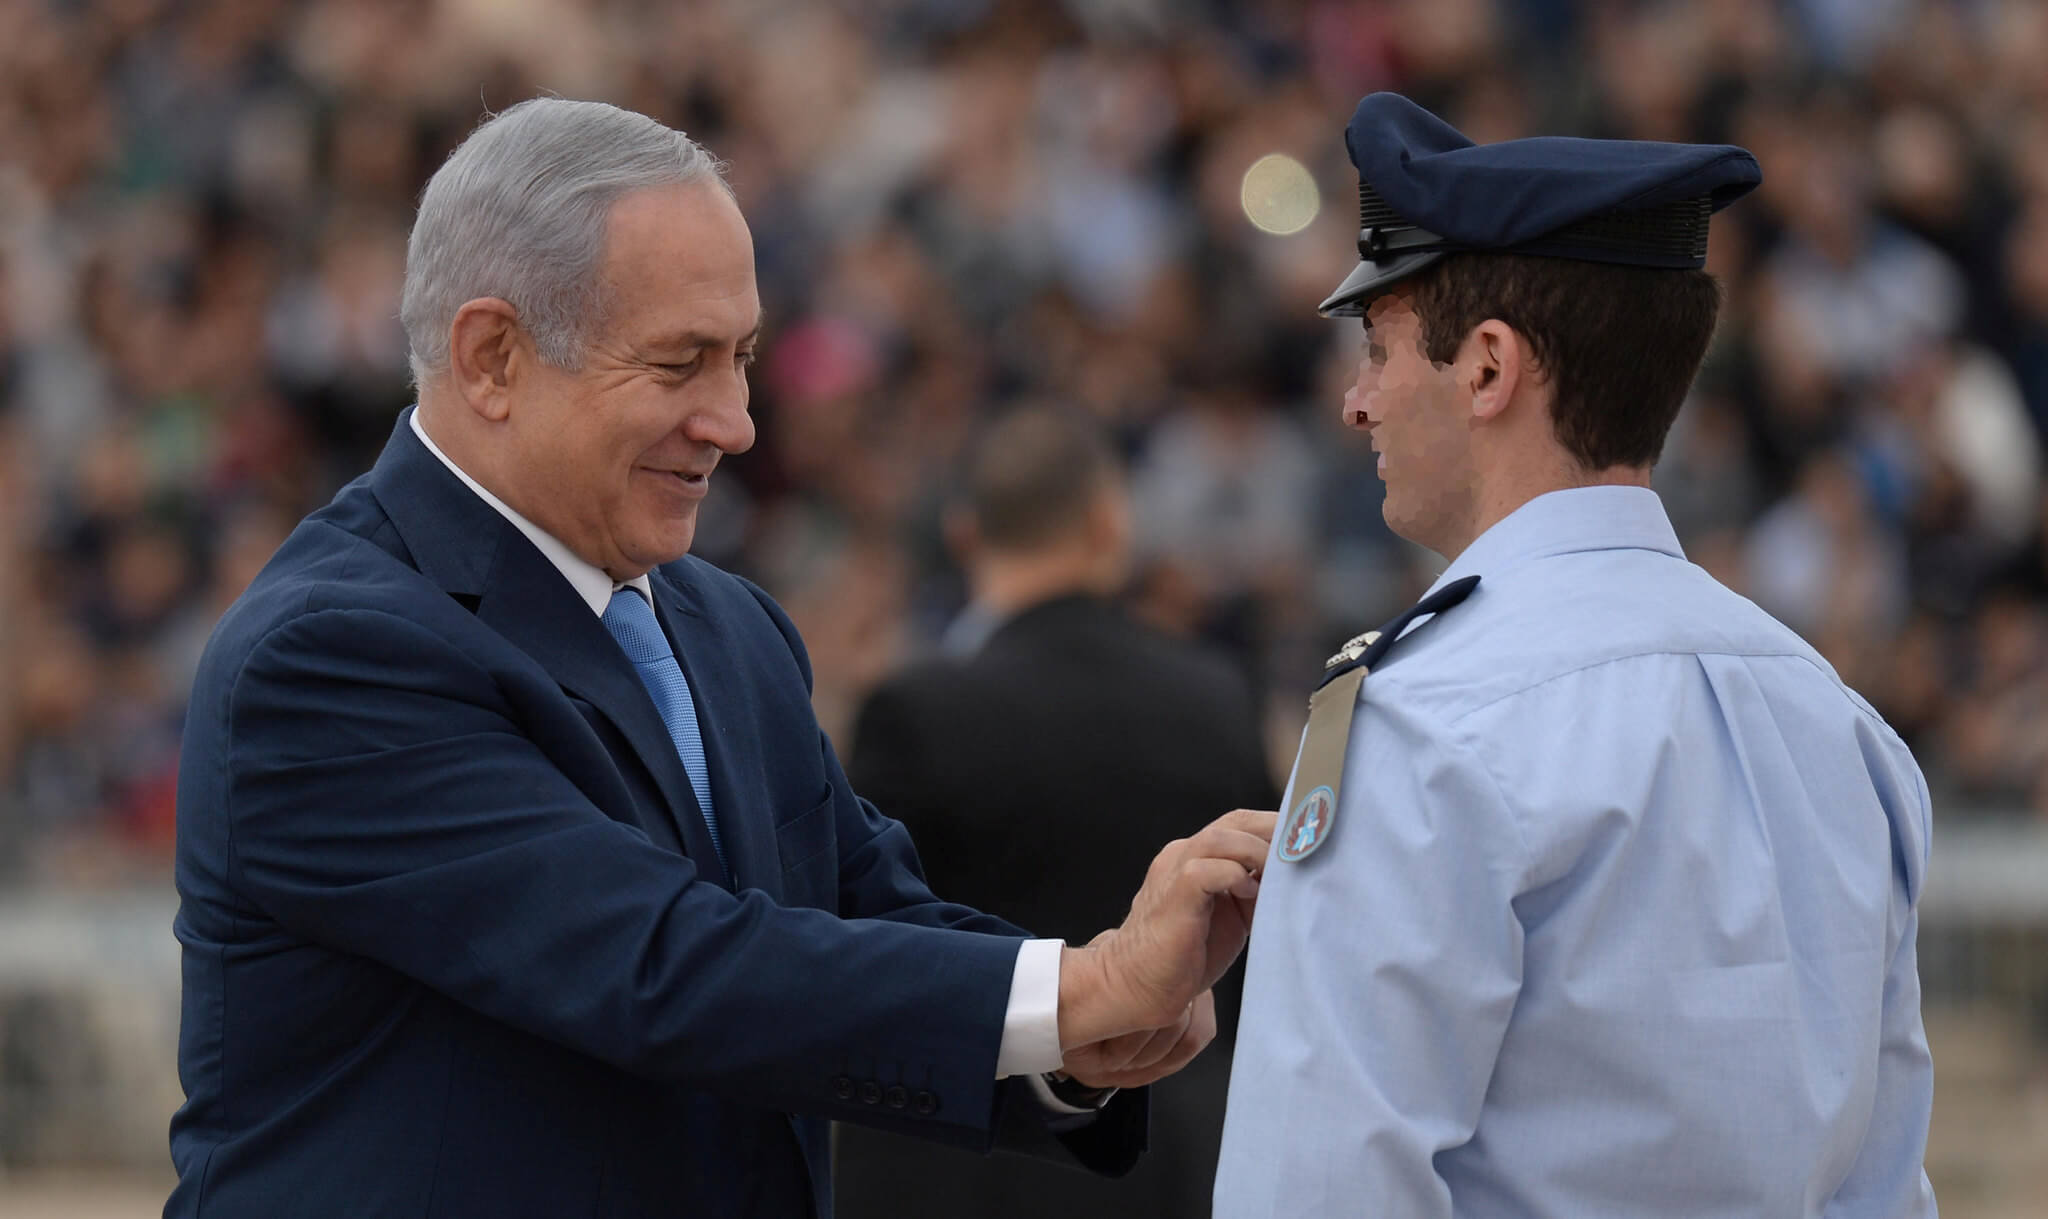 Israeli Prime Minister Benjamin Netanyahu at IDF pilot's course graduation ceremony on  Dec. 27, 2017.